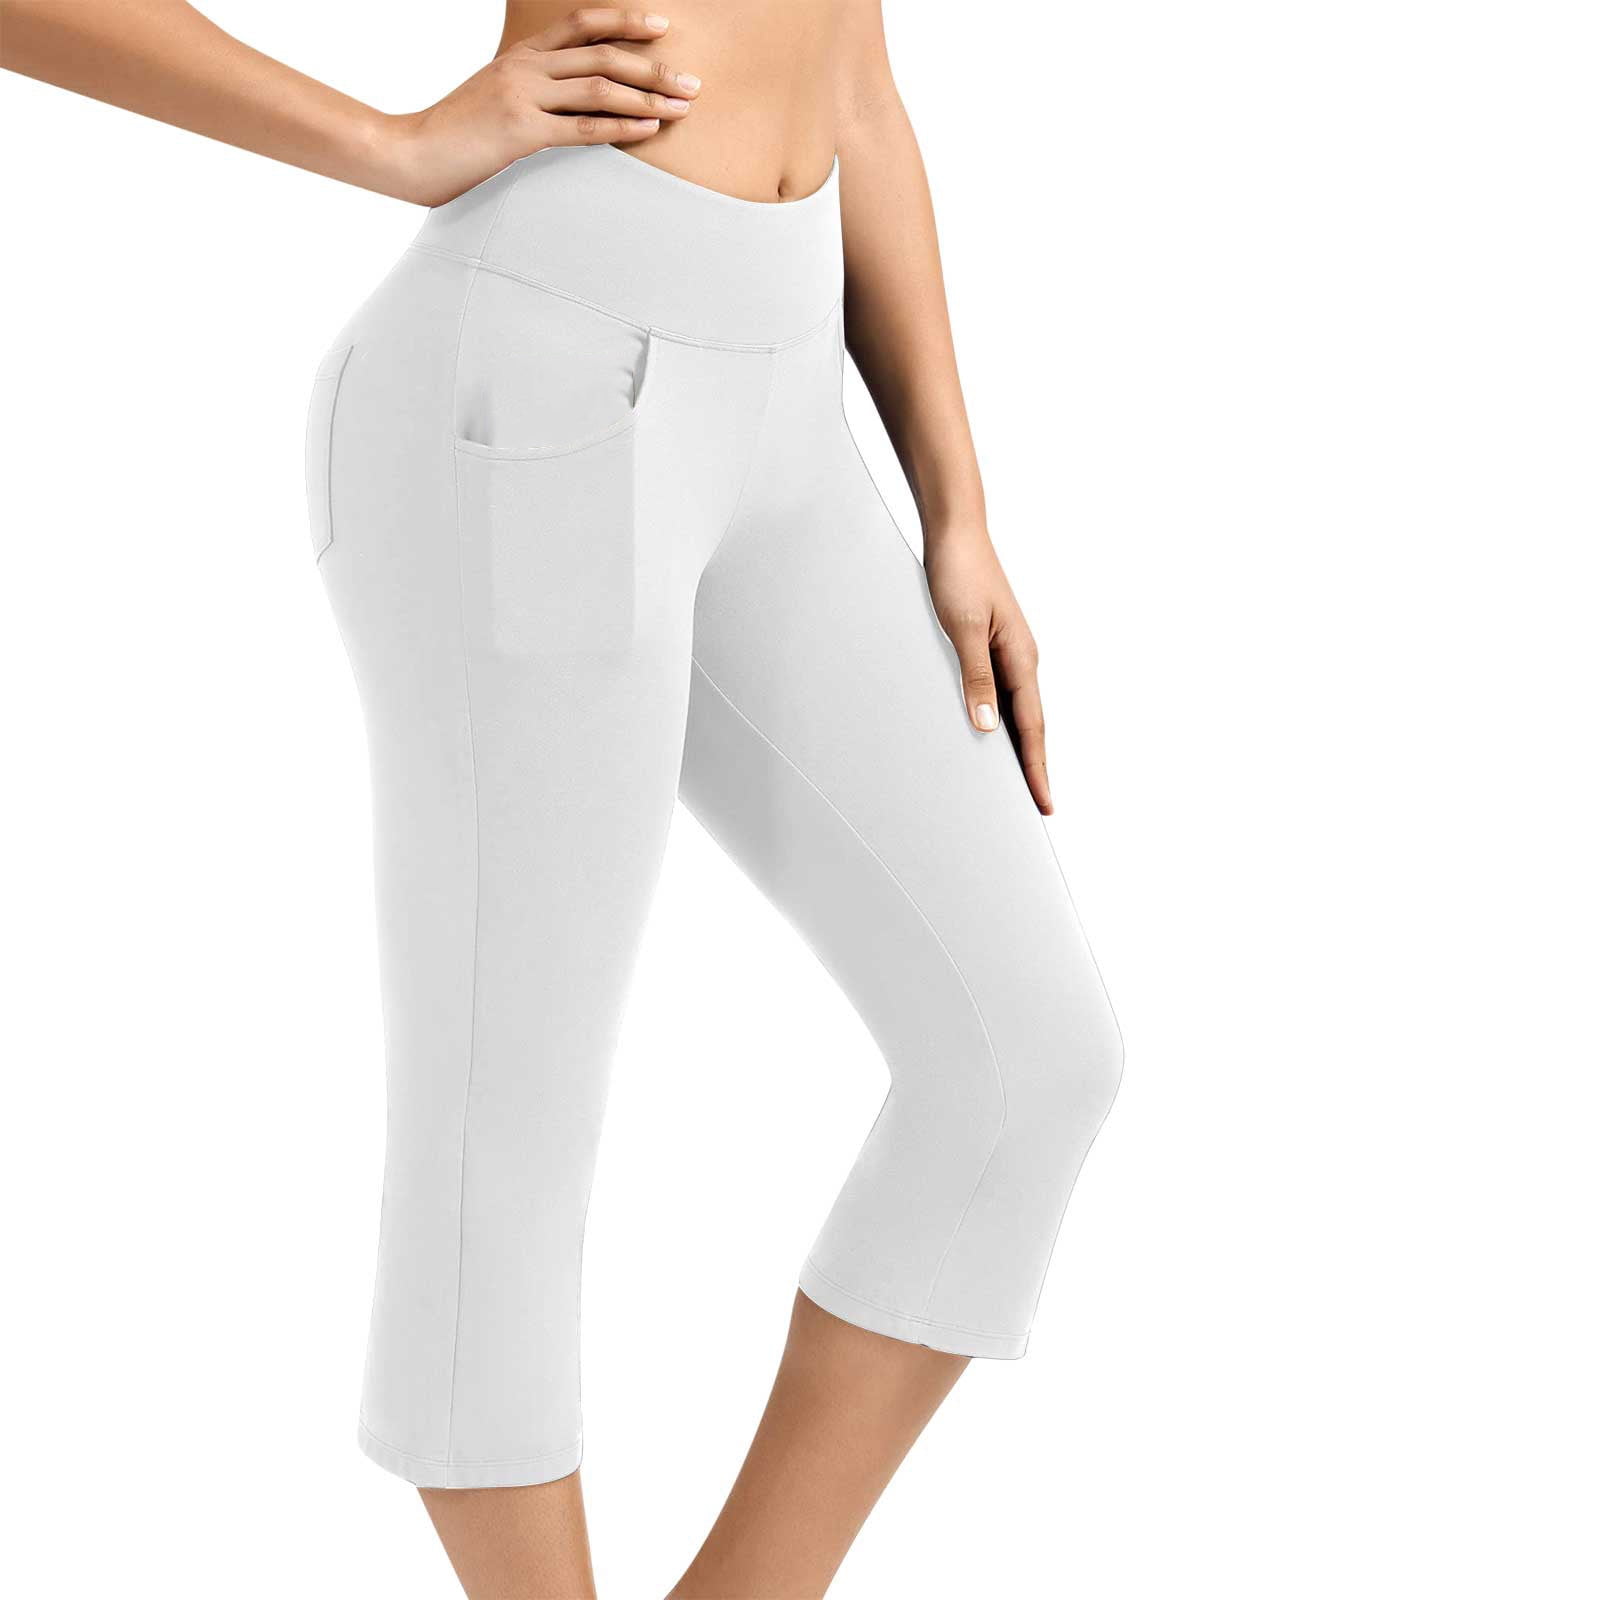 hoksml Women's Yoga Nine Pants Straight Leg Solid Color Workout Pants  Capris Regular Tall Length with Pockets on Clearance XL